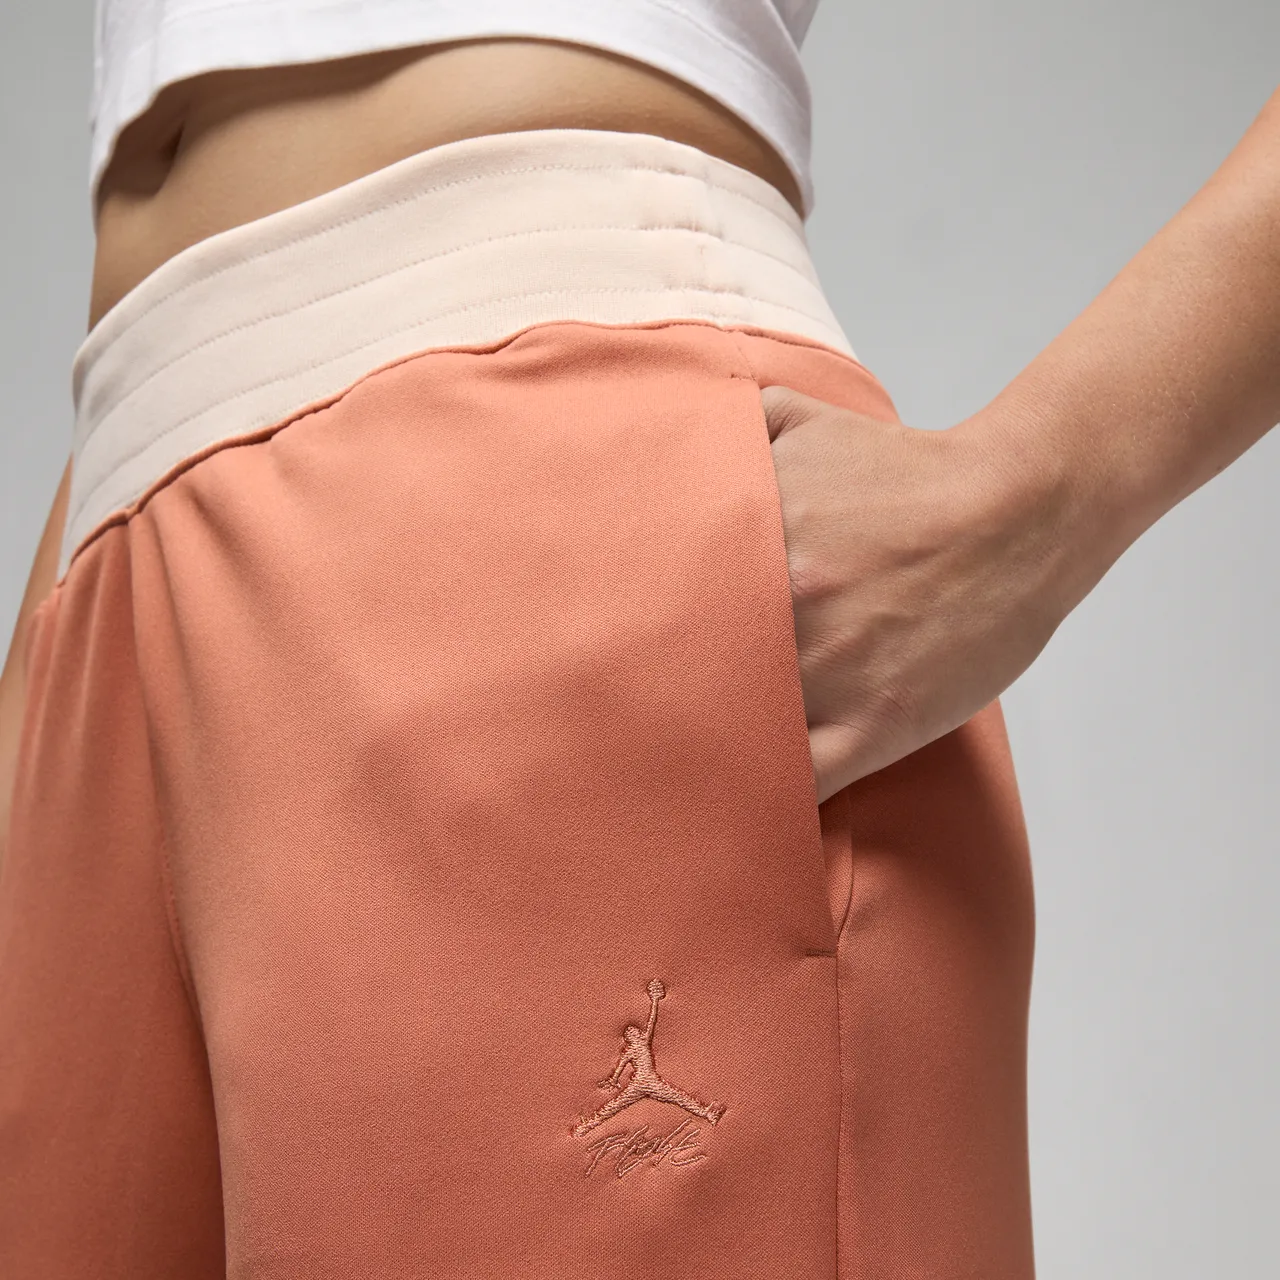 Jordan (Her)itage Women's Suit Trousers - Orange - Cotton